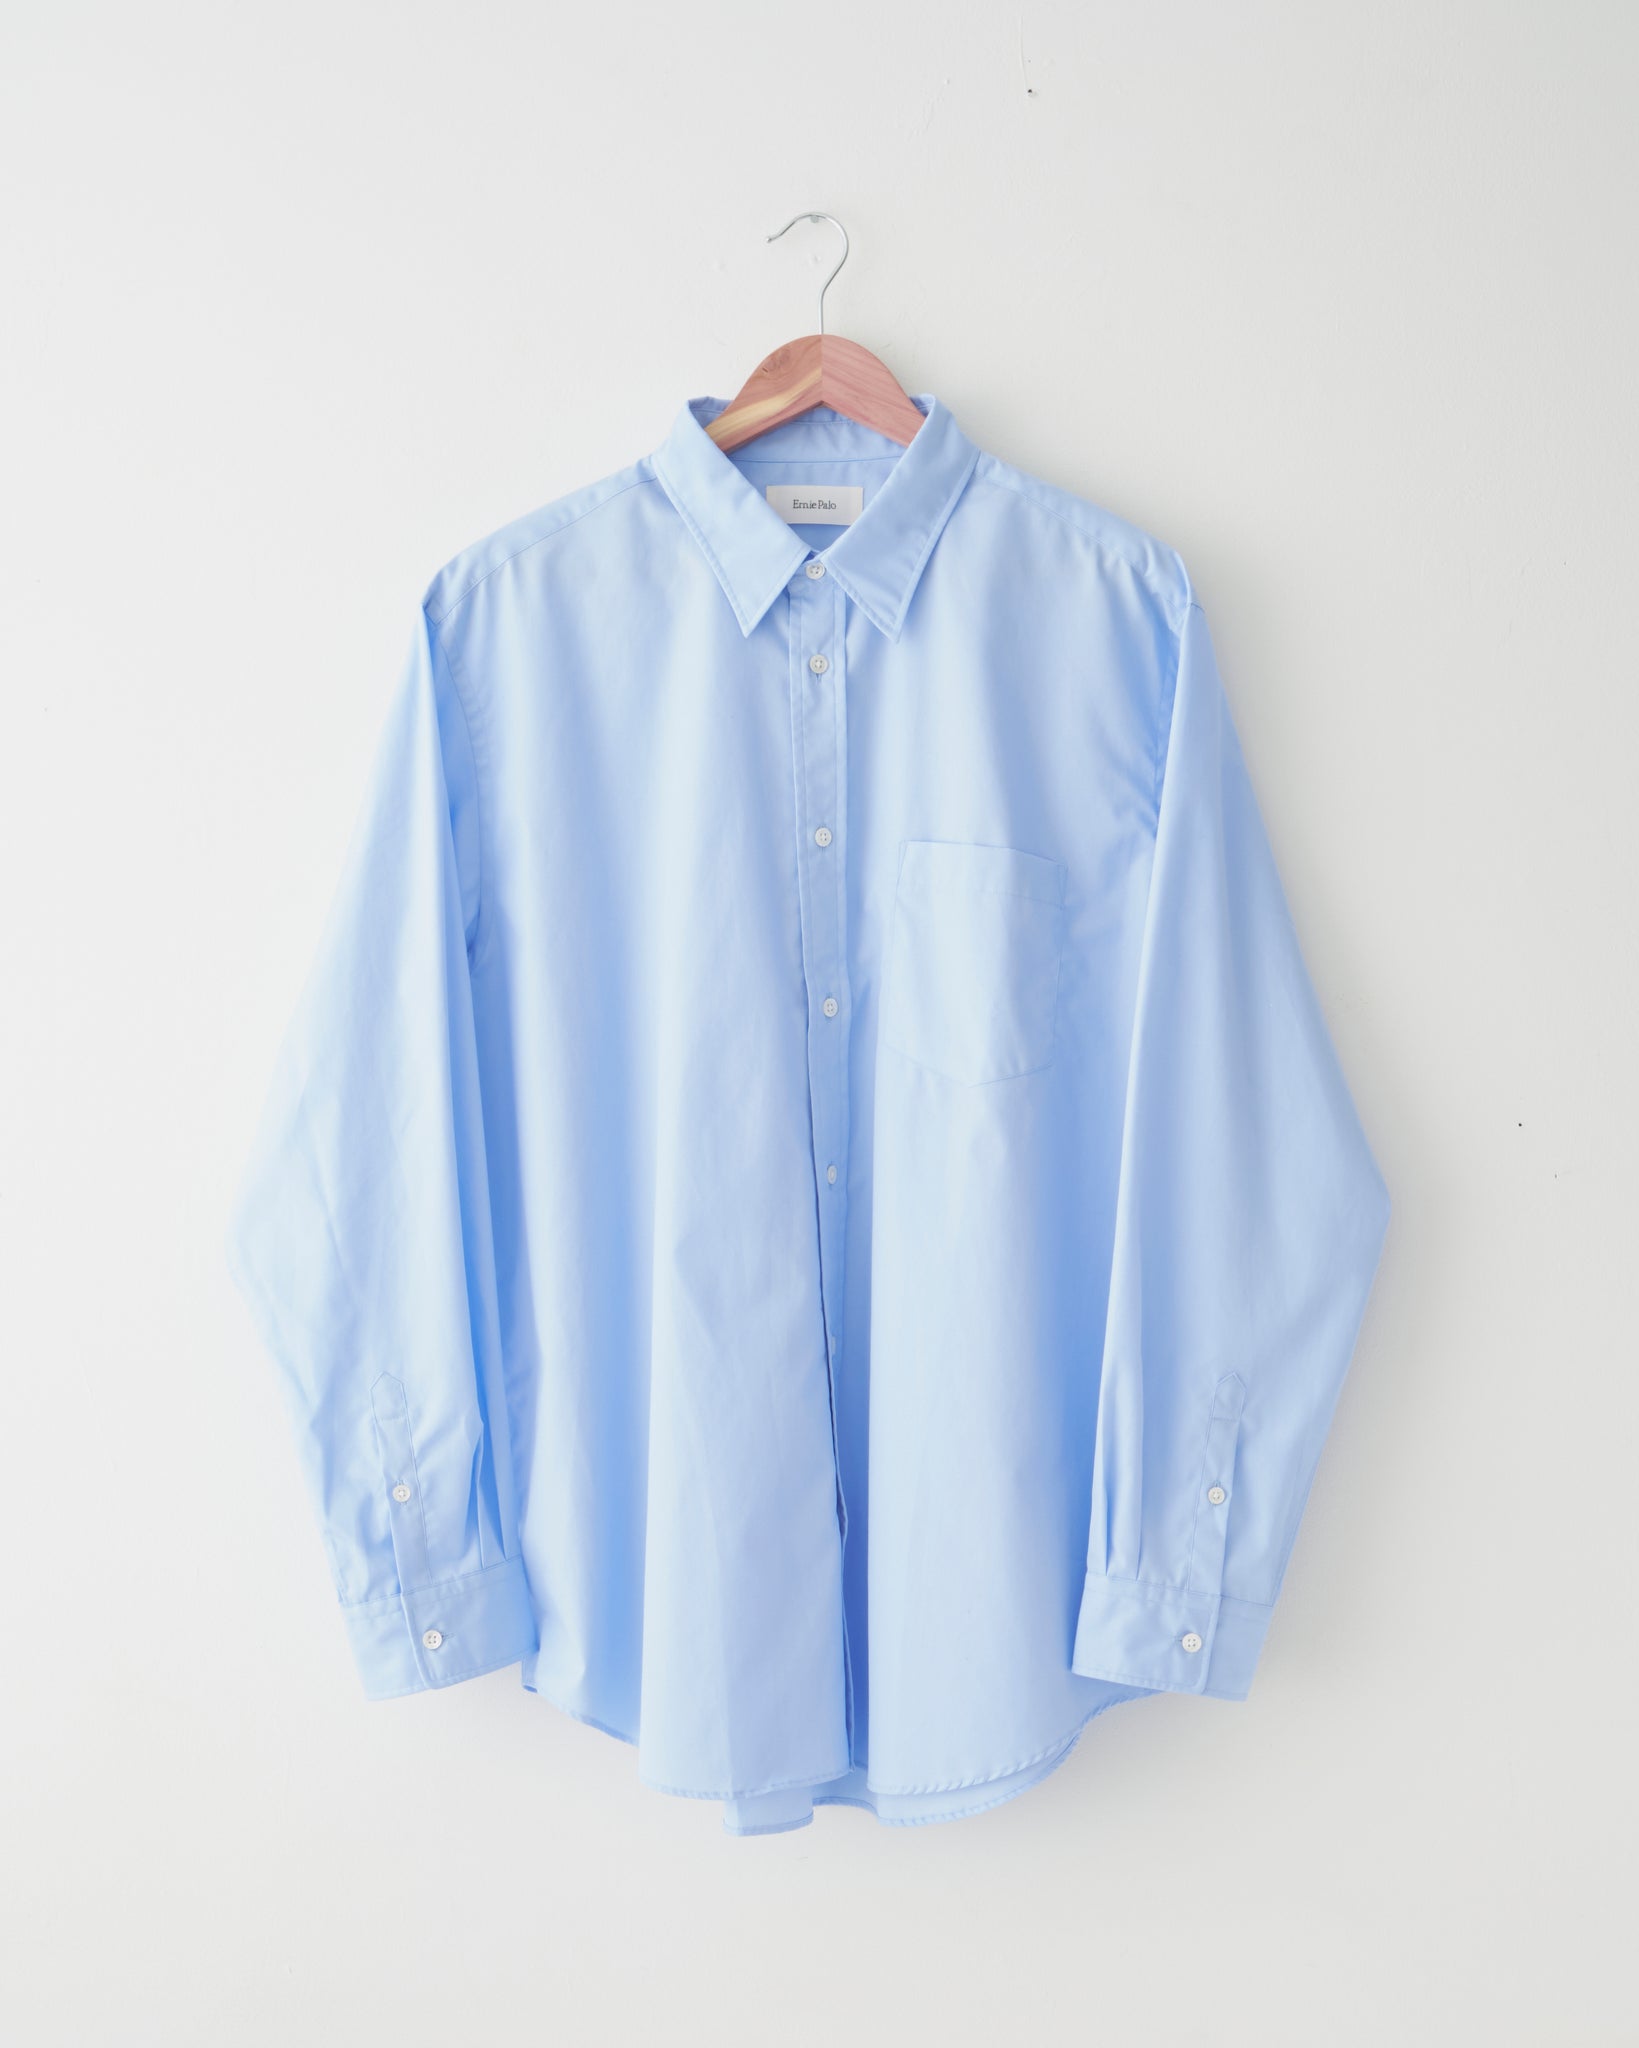 Cotton Buttoned Shirt, Sax